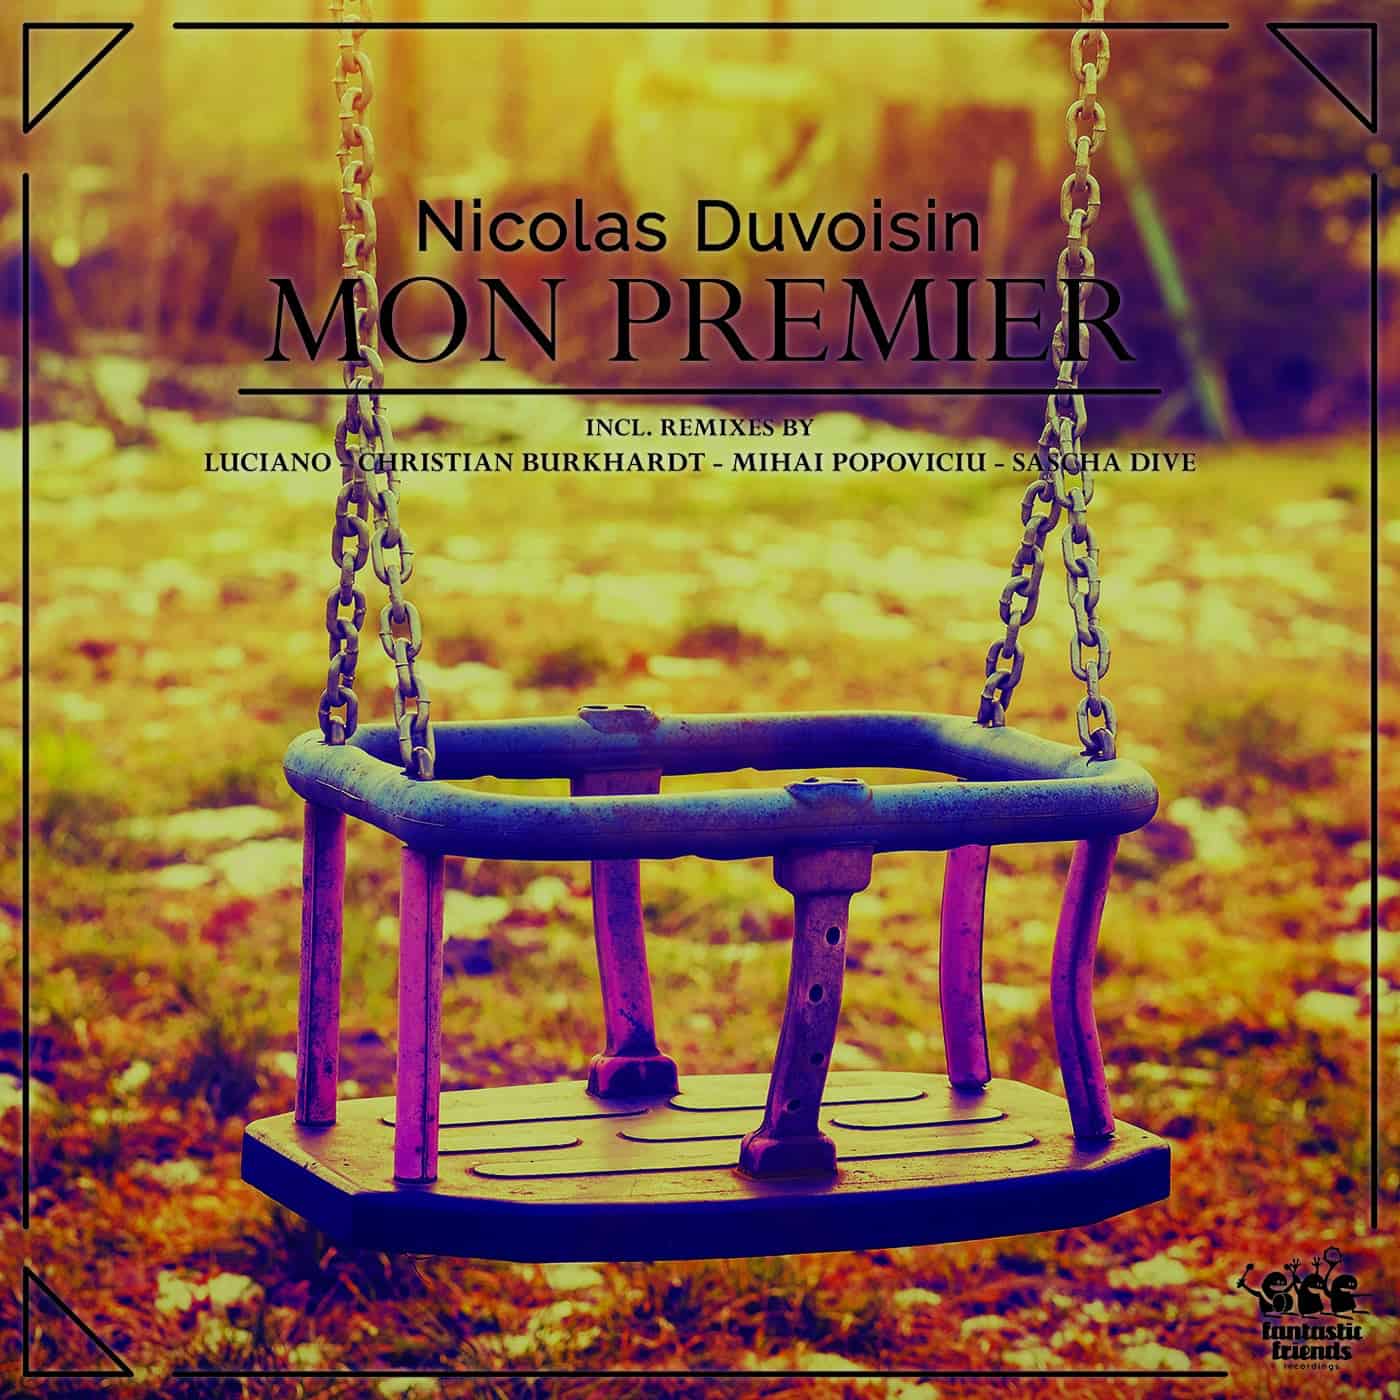 image cover: Nicolas Duvoisin - Mon Premier Remixes / FFRALBUM002